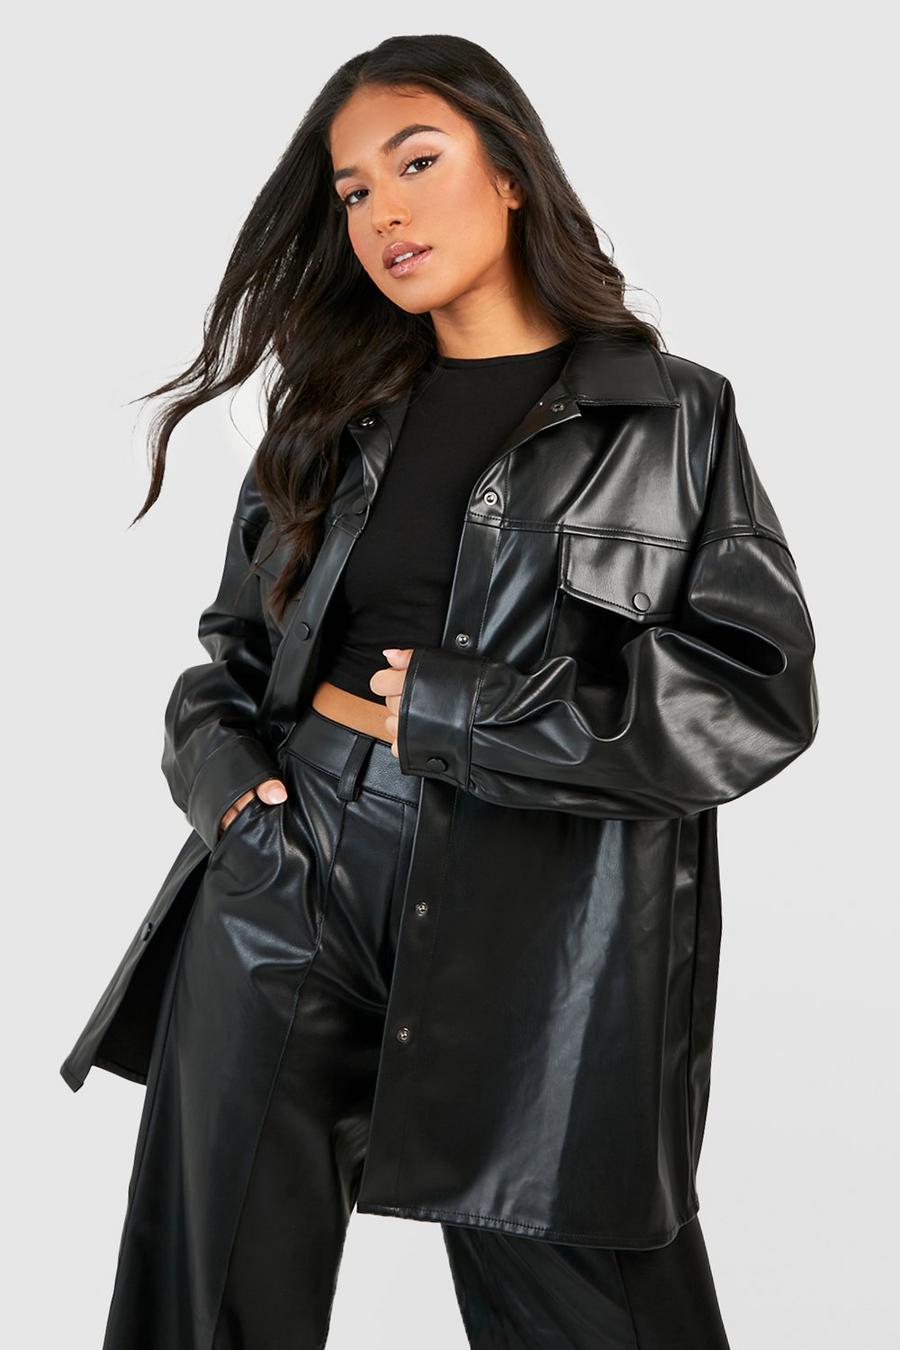 Petite Black Oversized Faux Leather Blazer